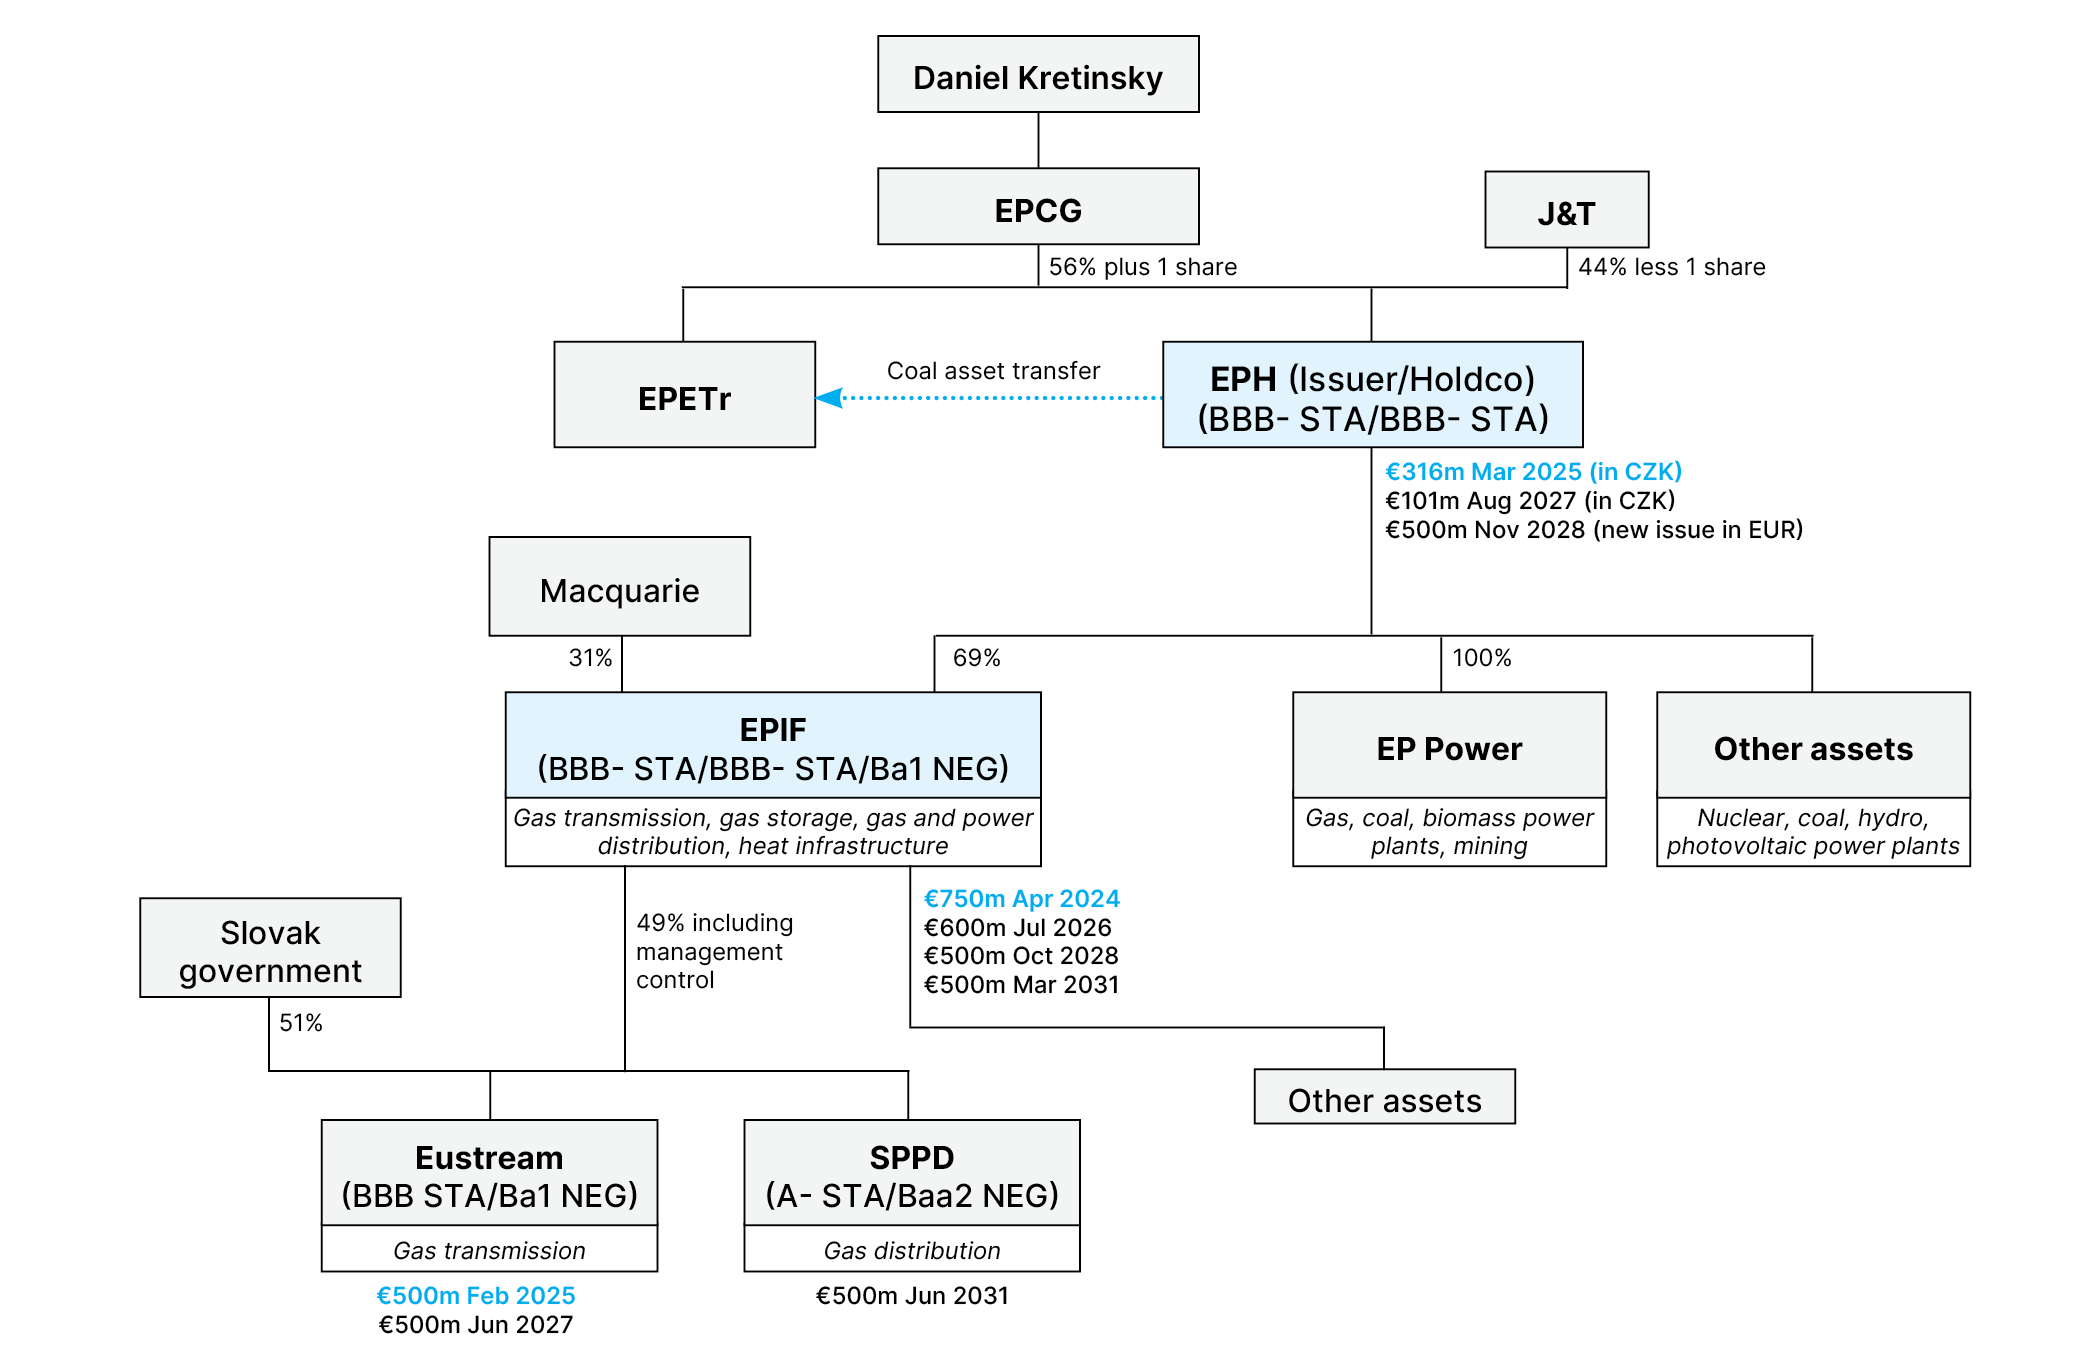 EPH organisational structure